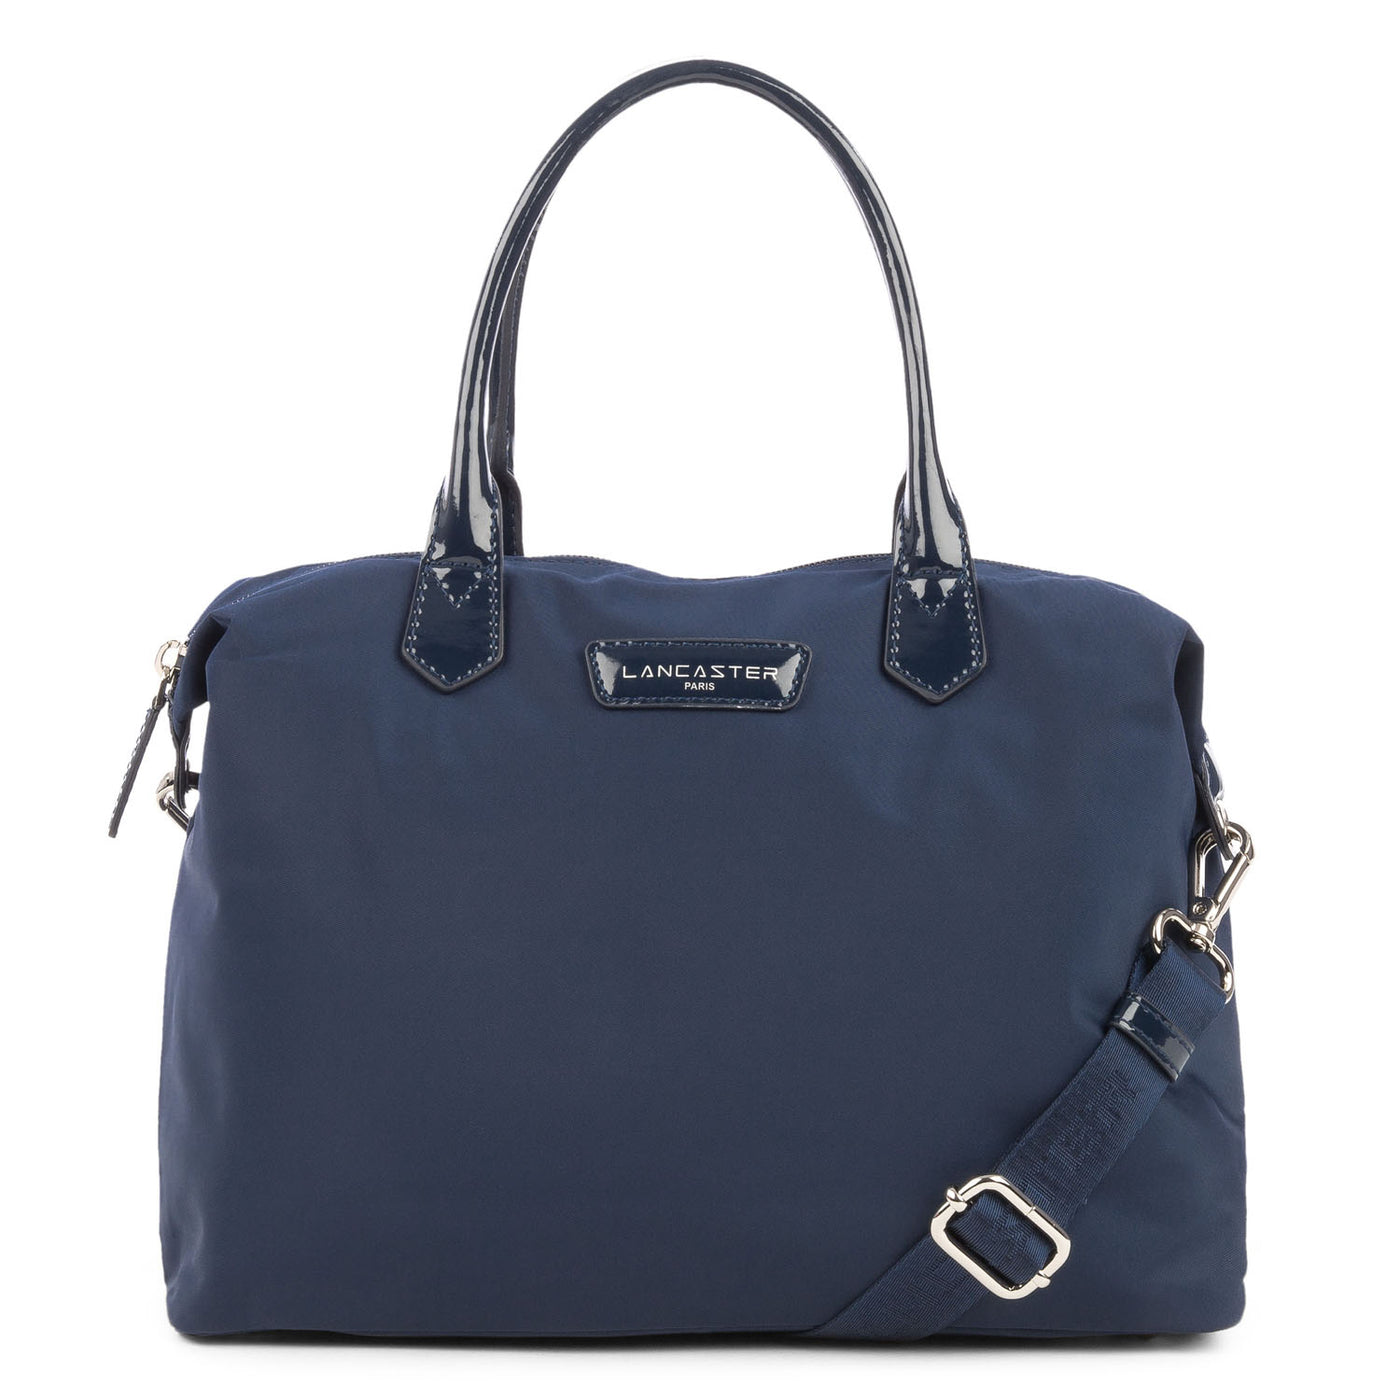 sac à main - basic verni #couleur_bleu-fonc